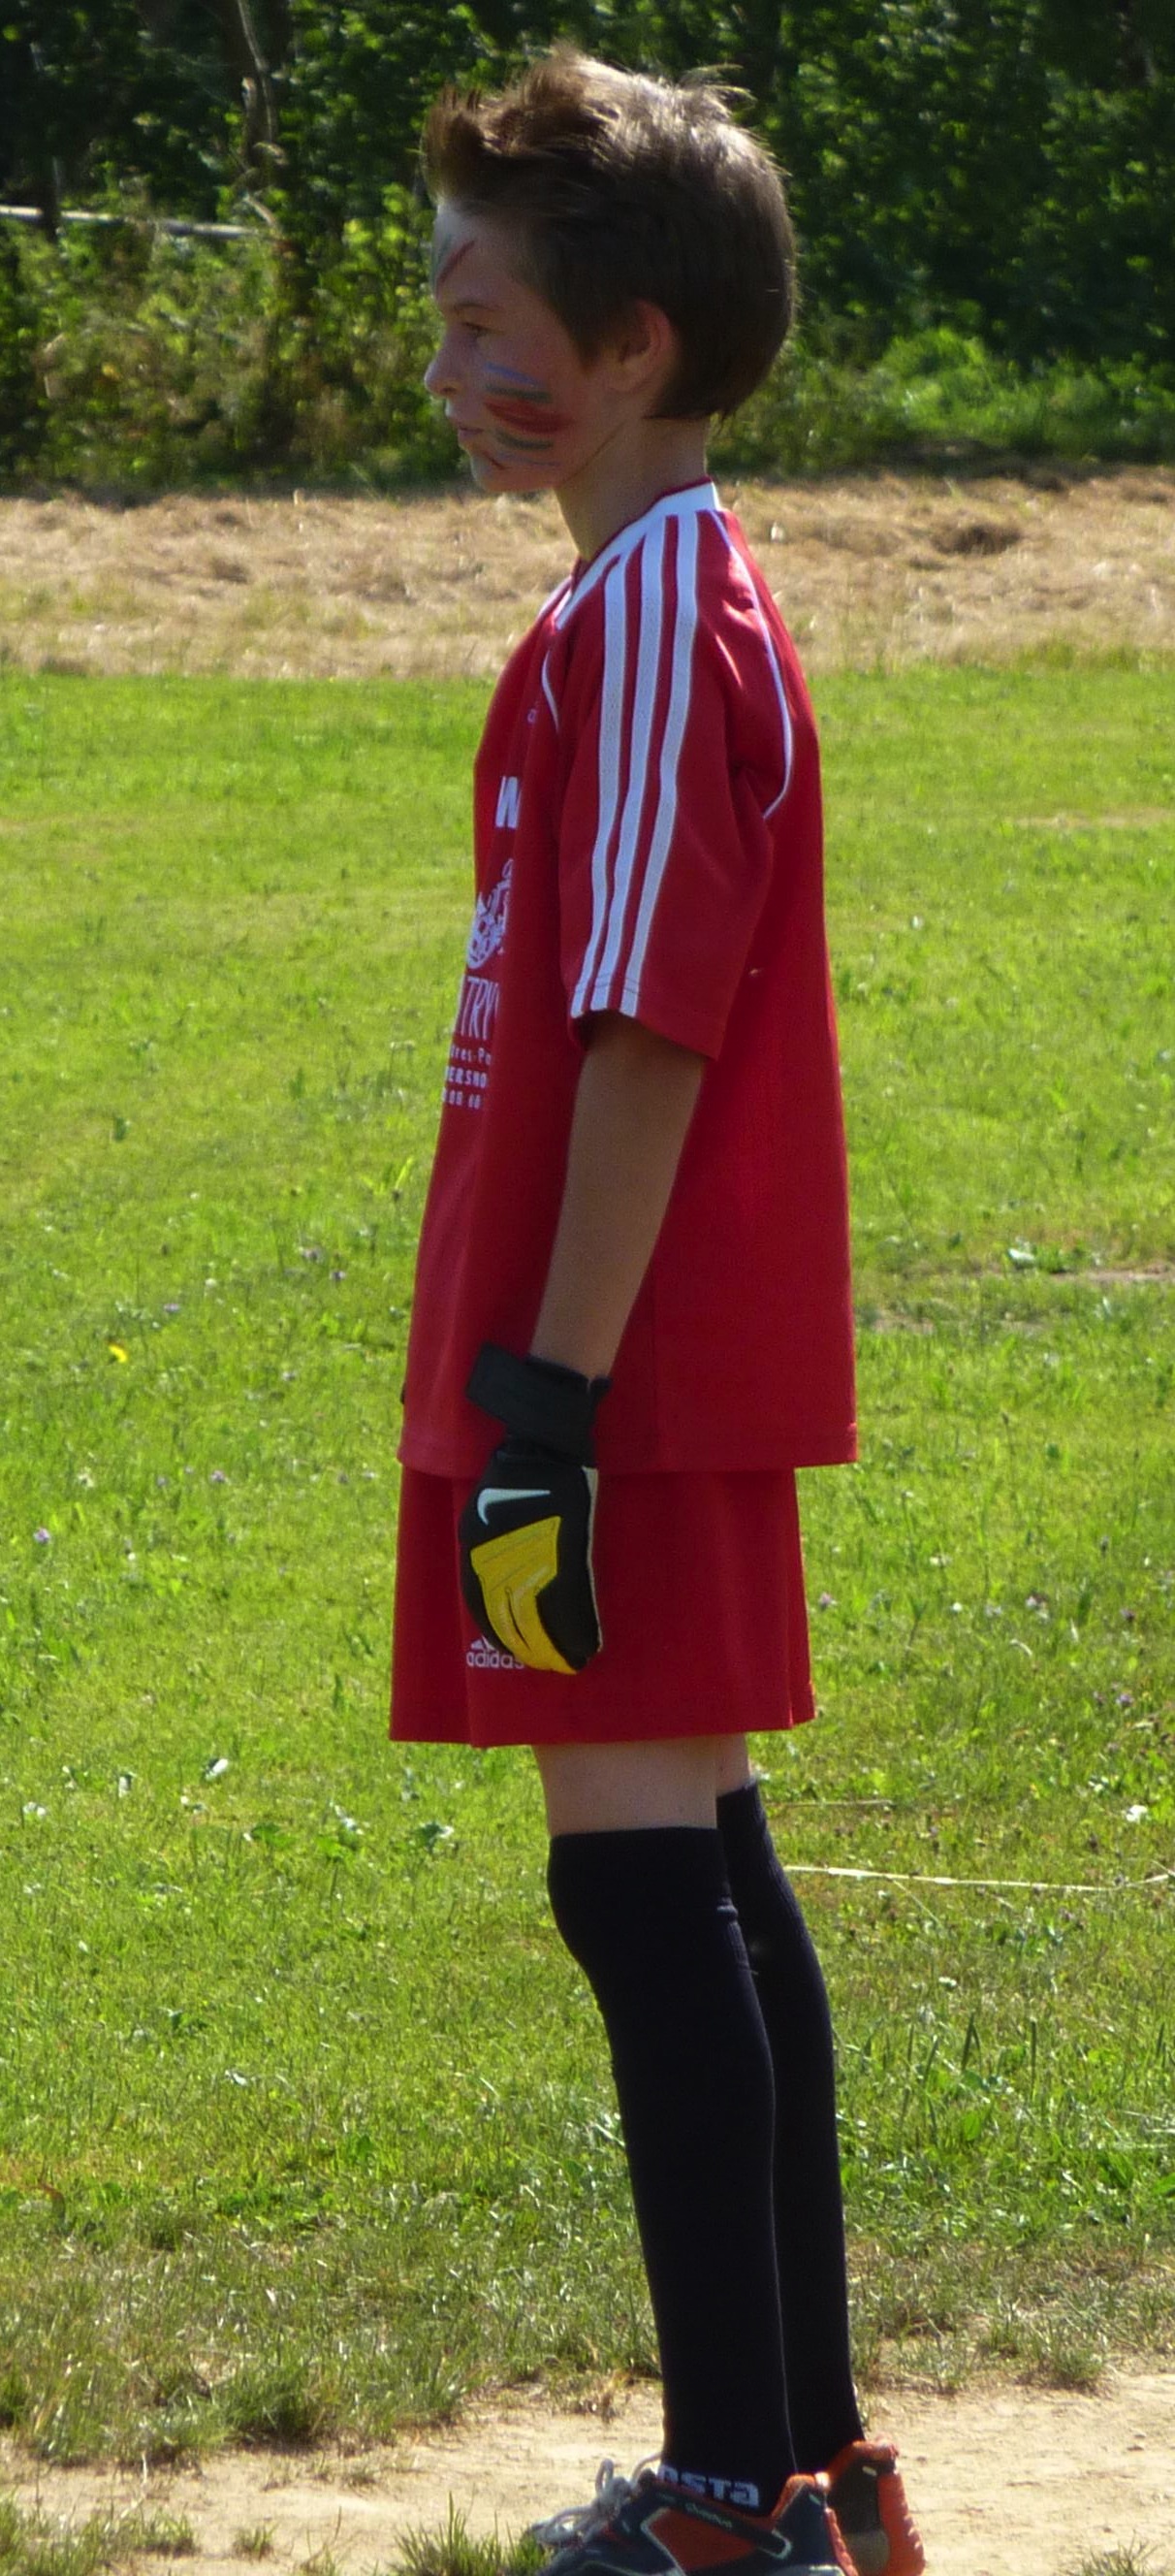 Boys_Soccer_05.JPG